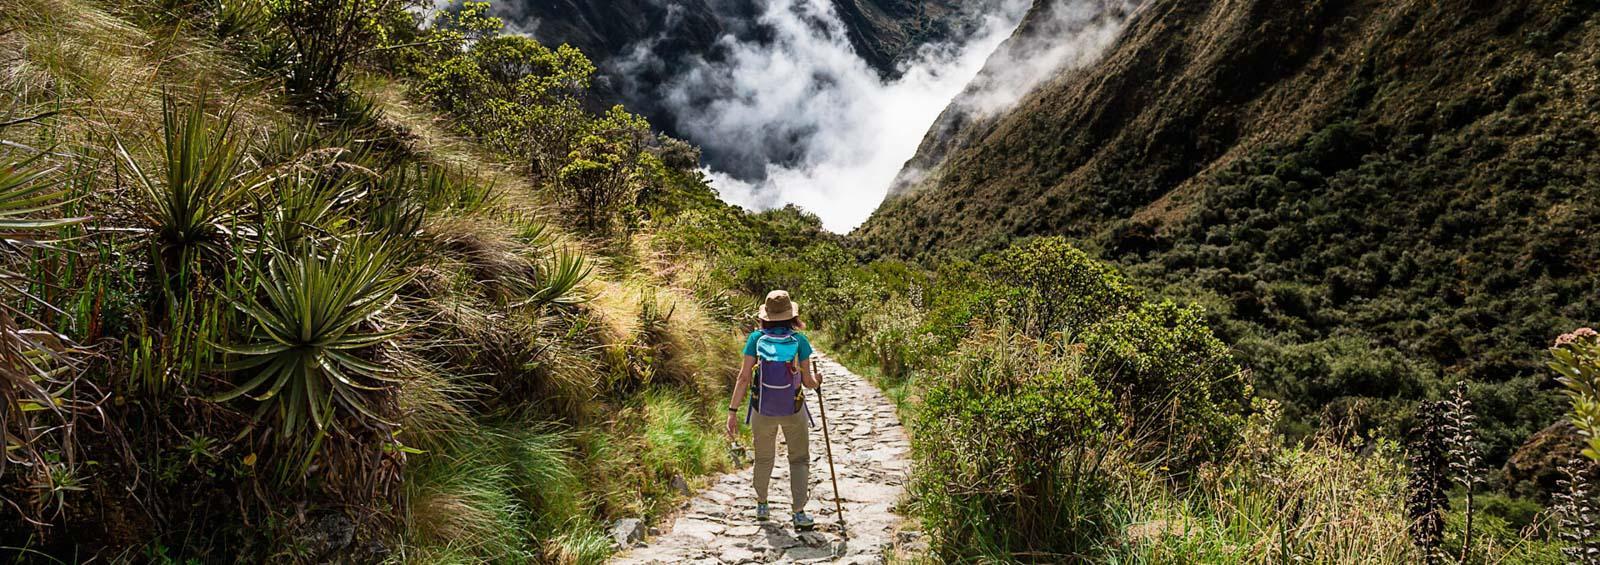 "Анды и Амазонка", Тур в Перу на 15 дней